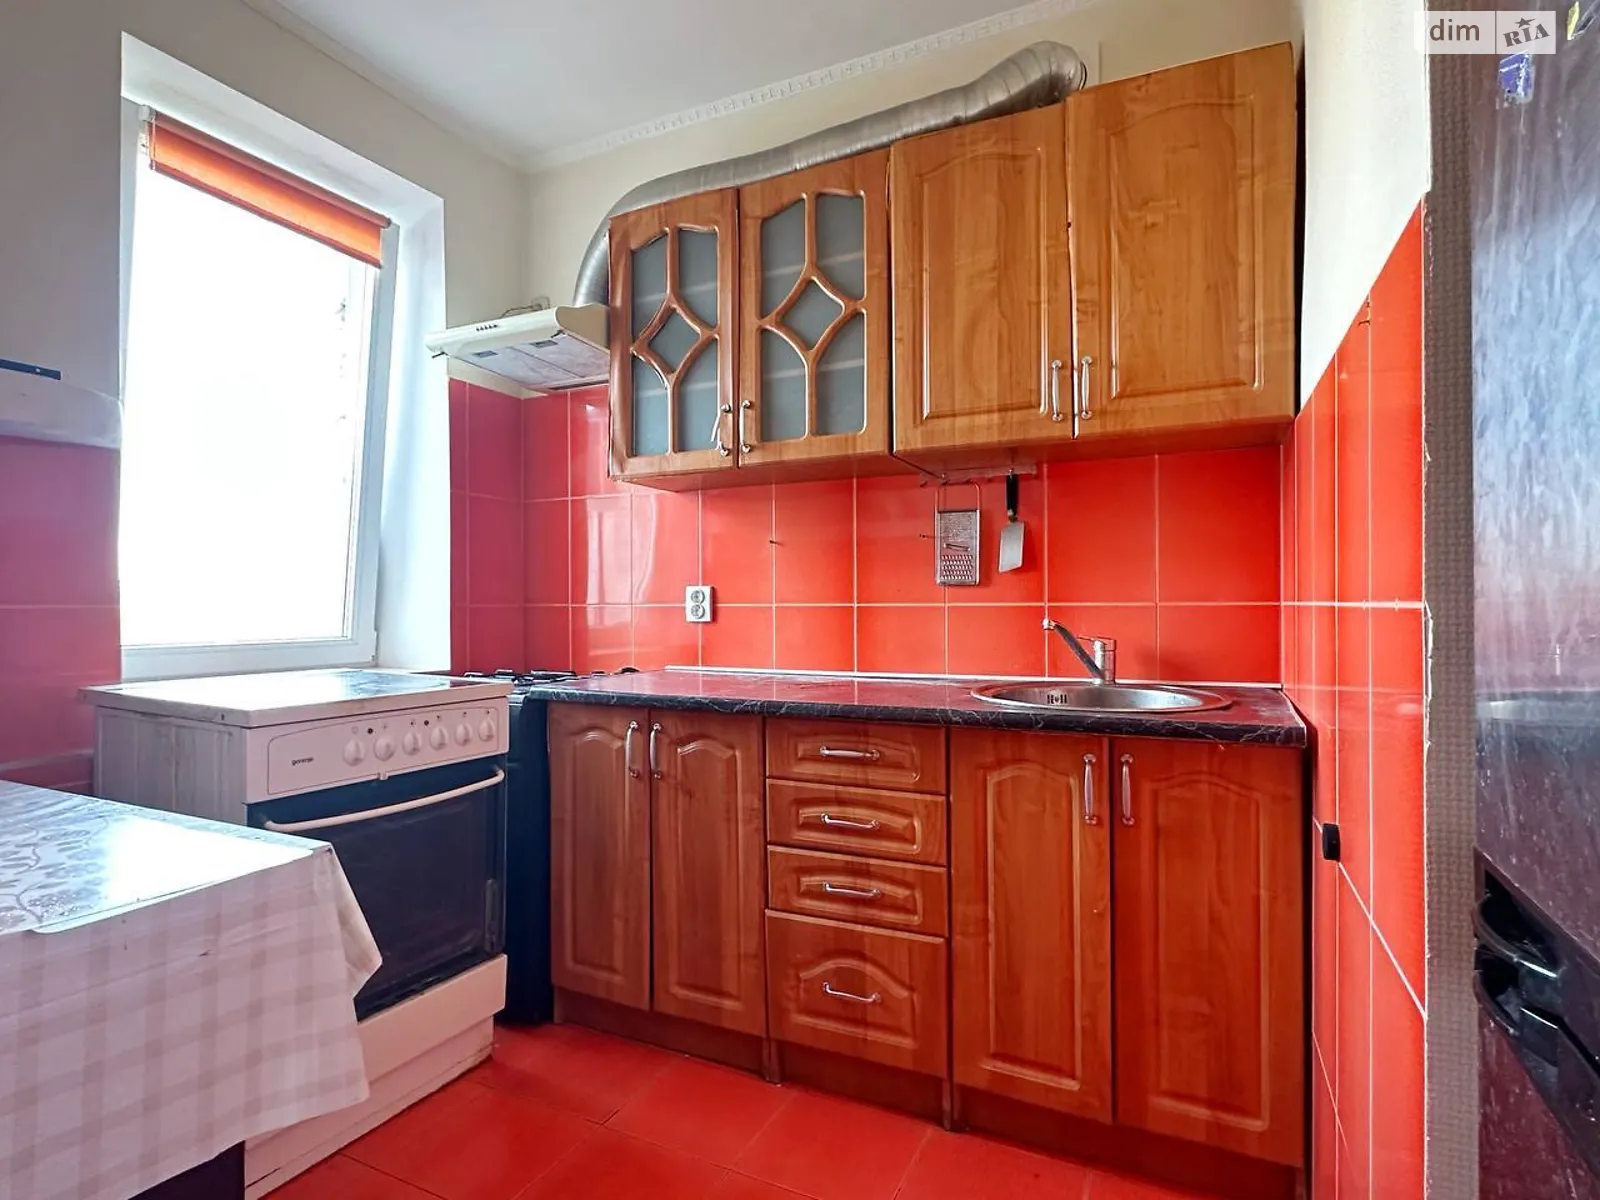 1-кімнатна квартира 30.7 кв. м у Луцьку, цена: 30000 $